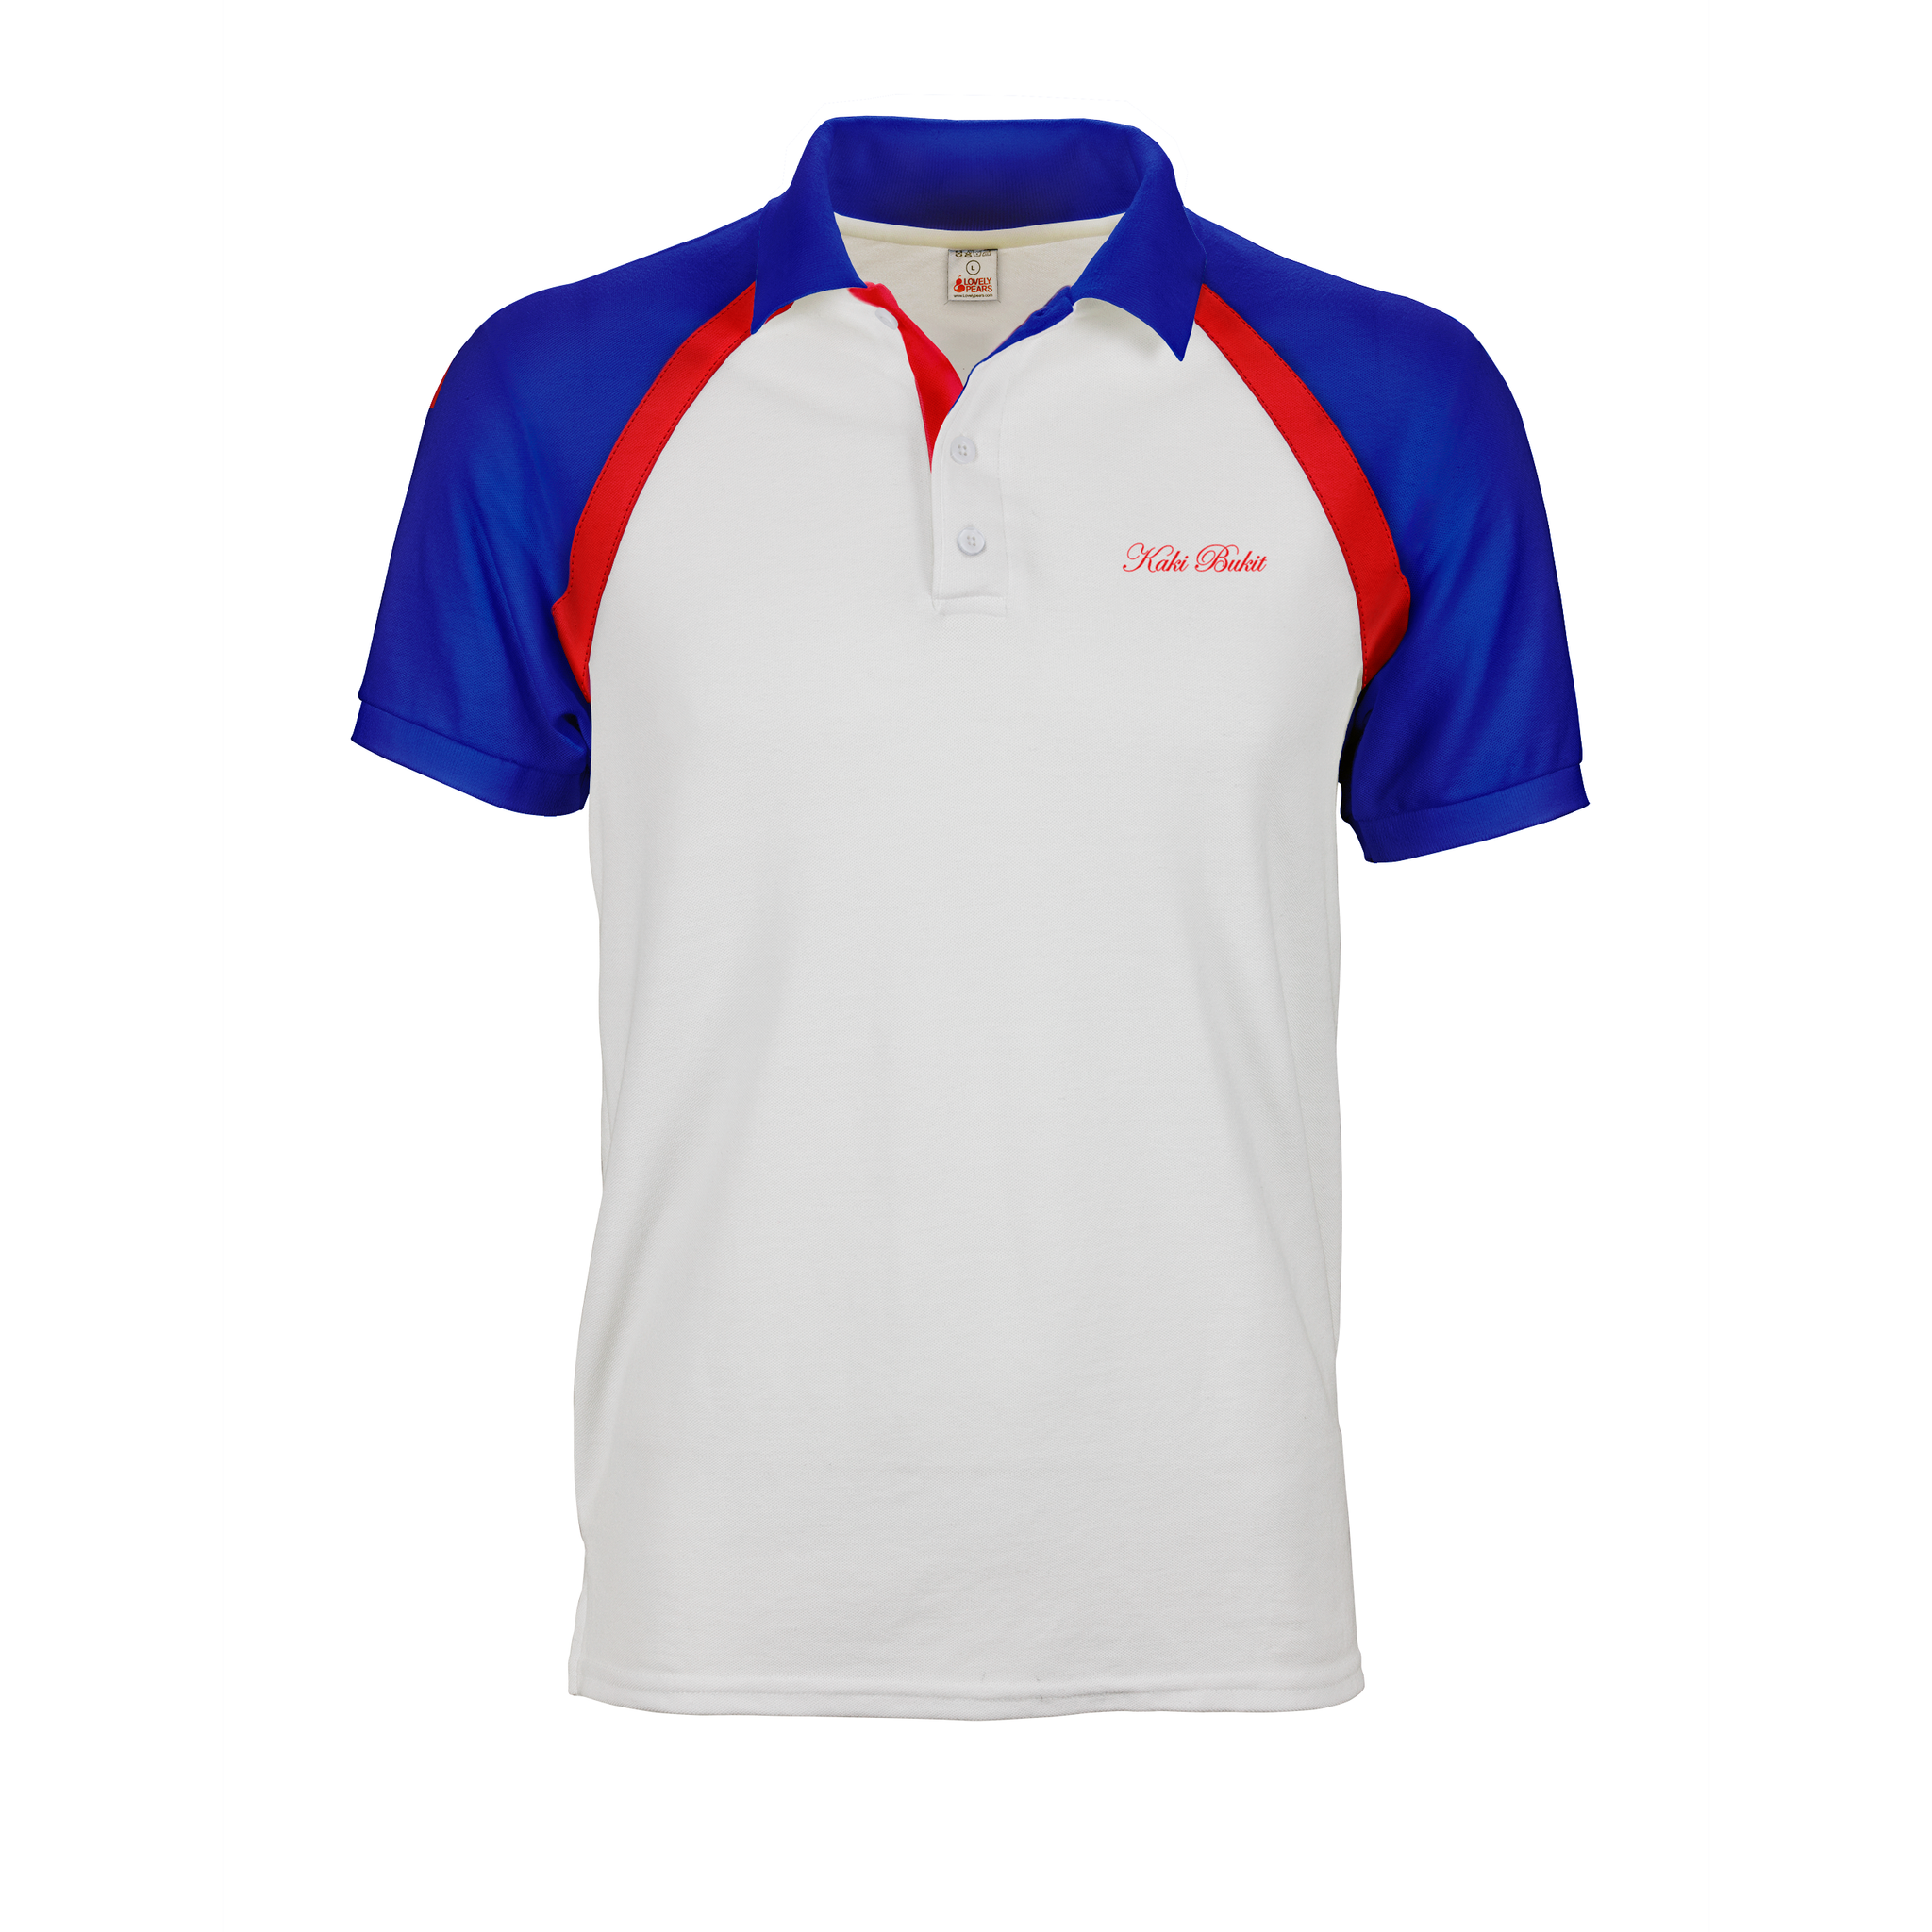 PAP Kaki Bukit Polo Tee Shirt with custom raglan sleeves